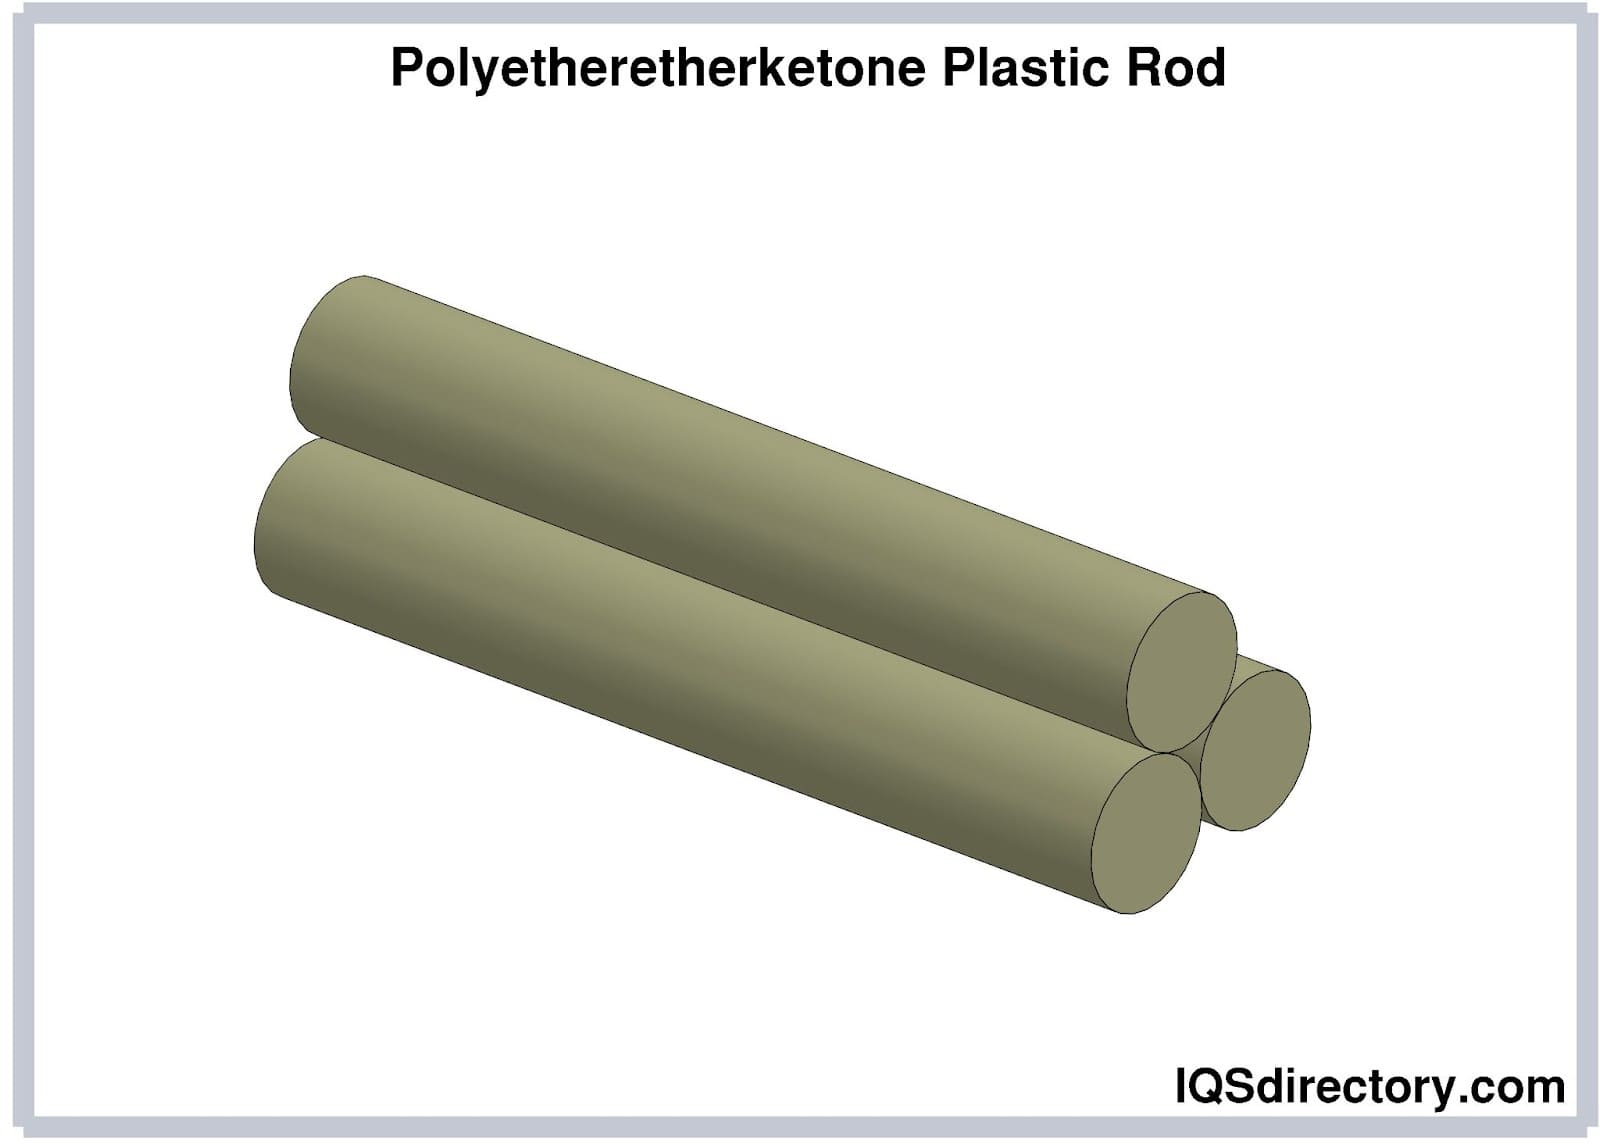 Polyetheretherketone Plastic Rod